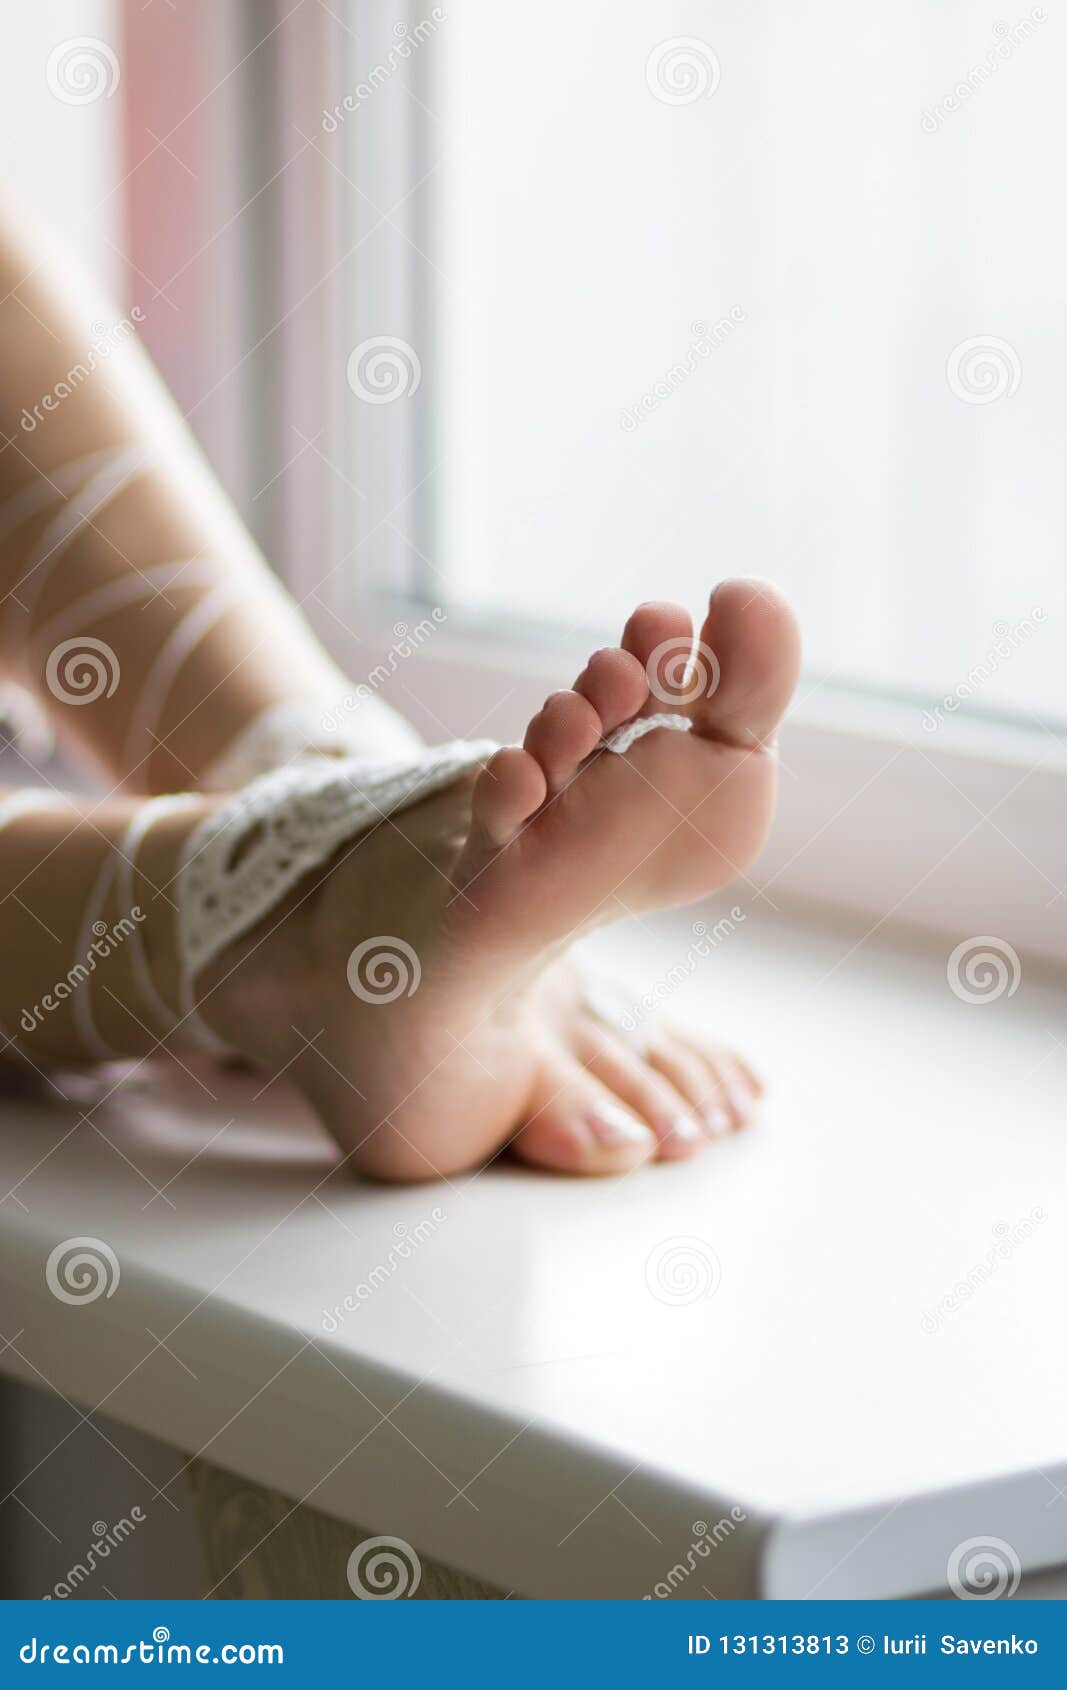 Long toes soles